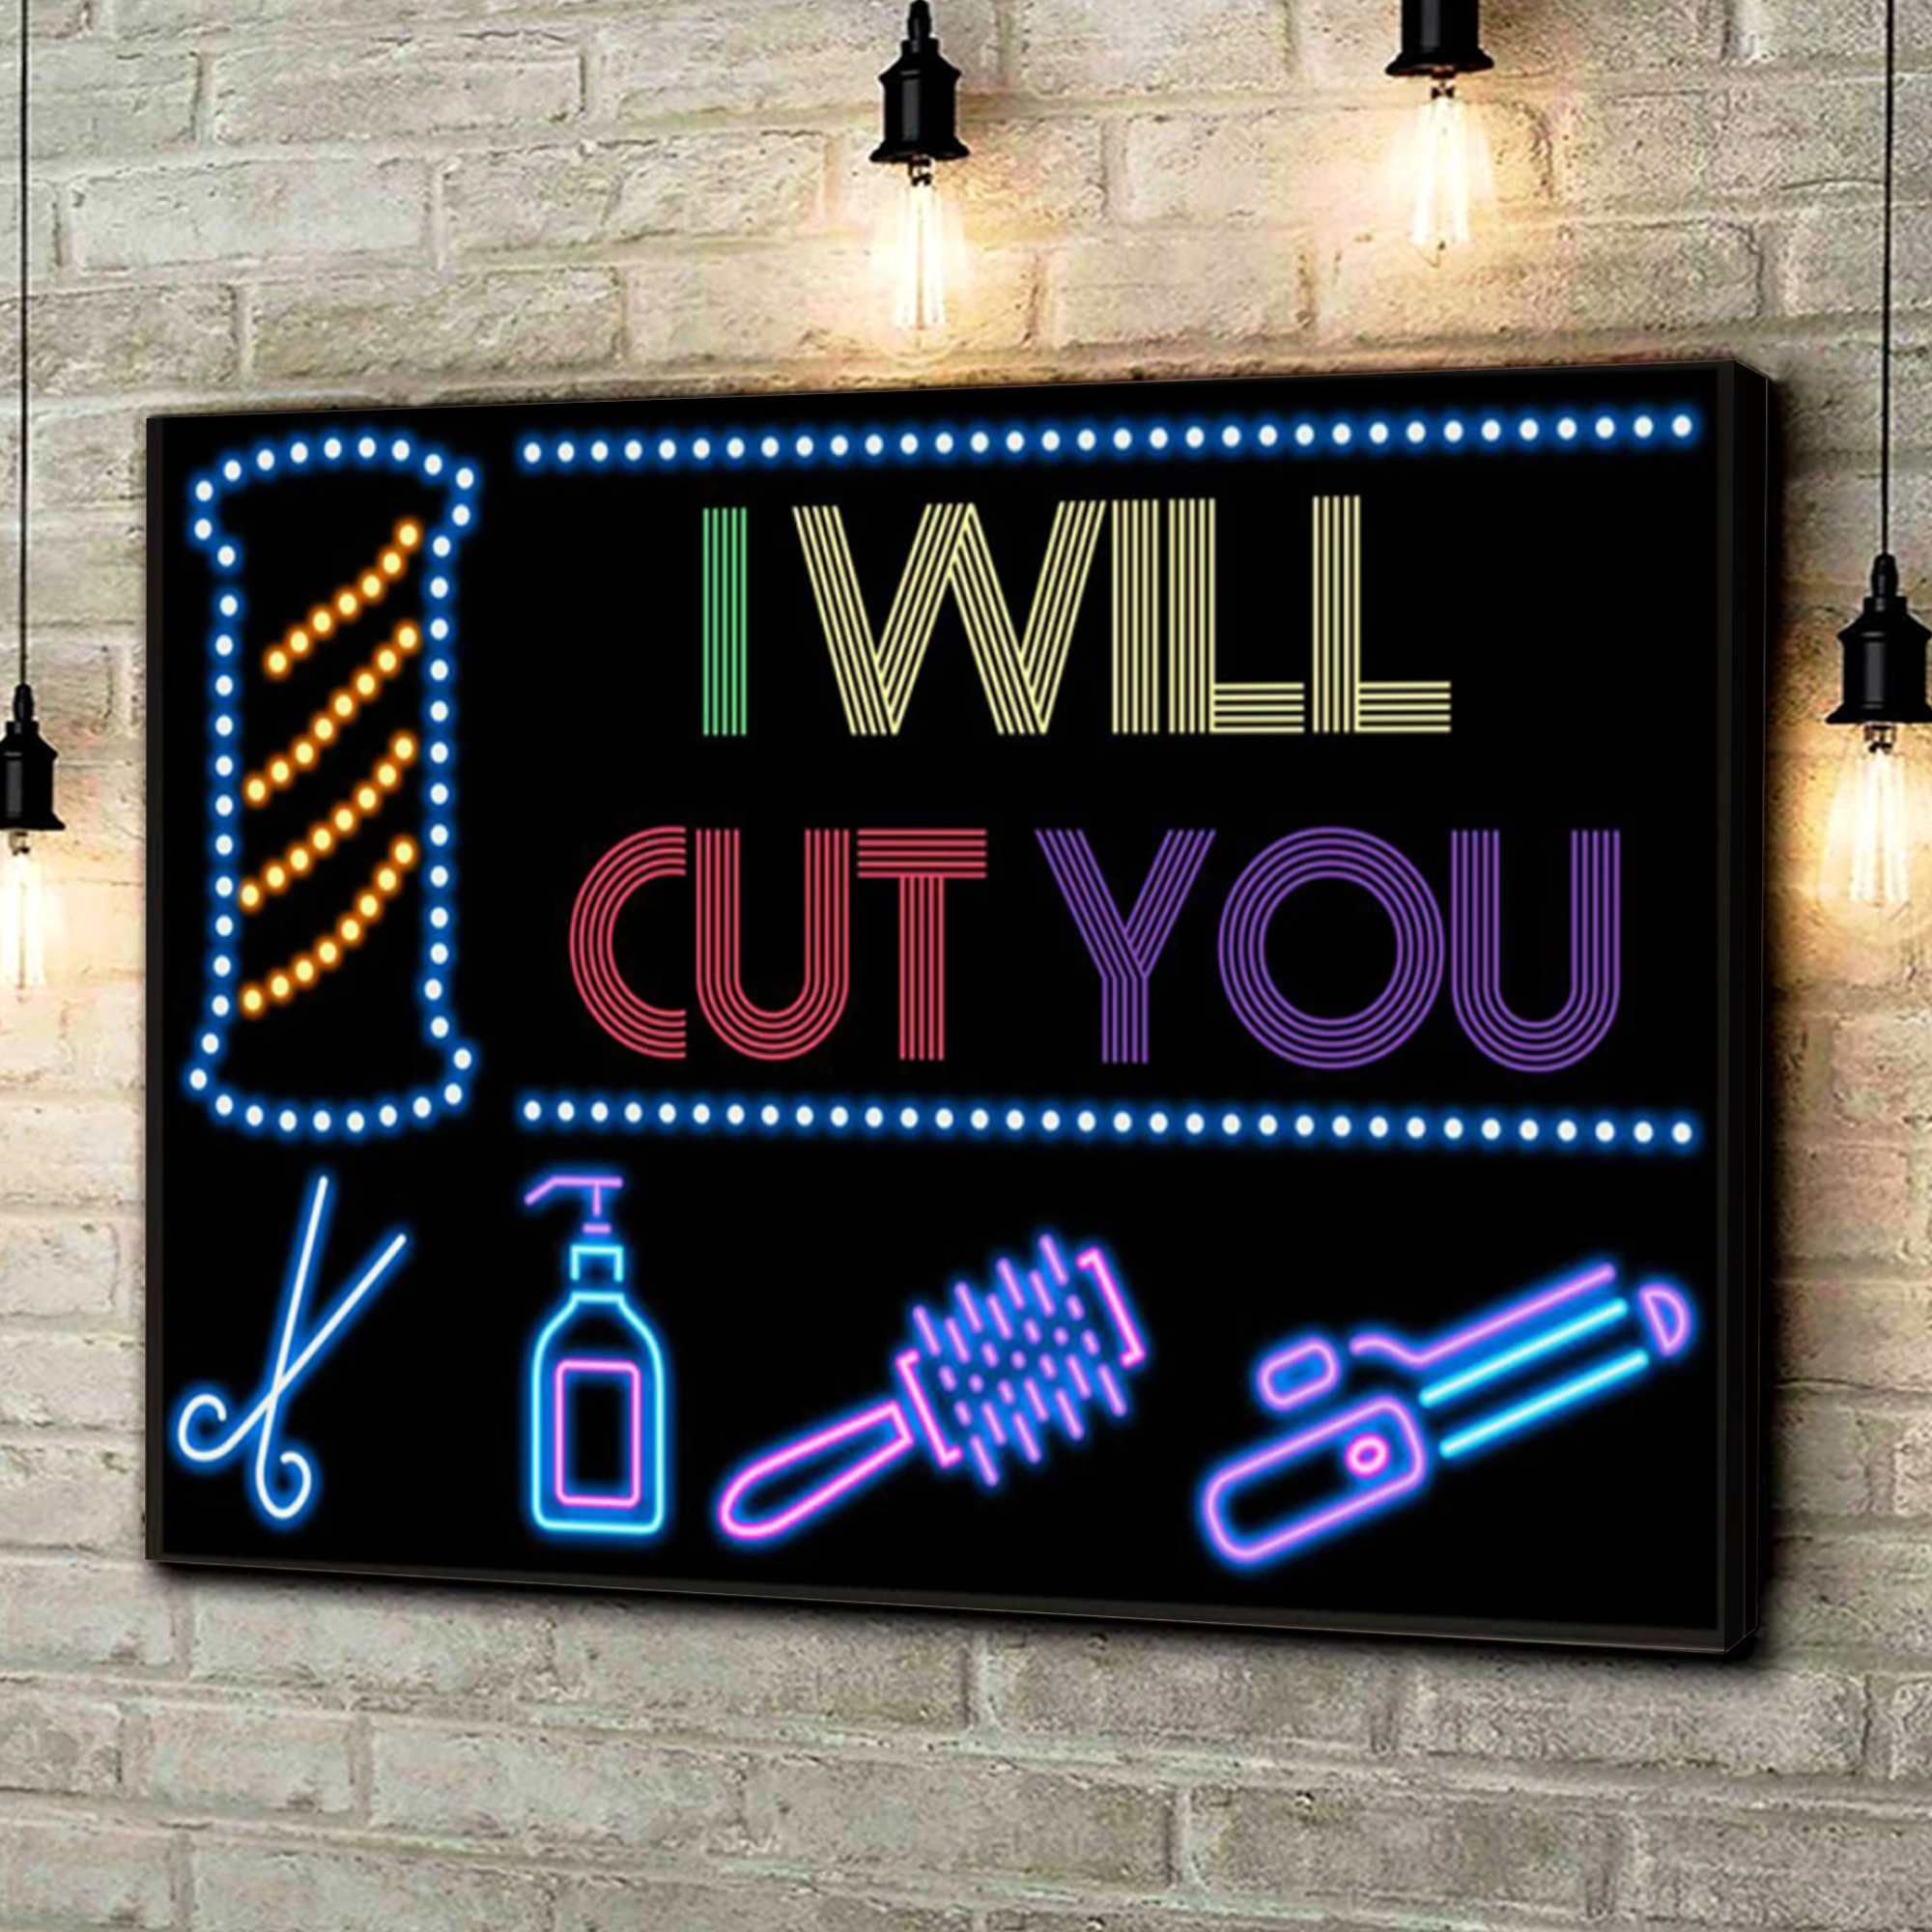 Hairstylist Canvas Wall Art – I Will Cut You